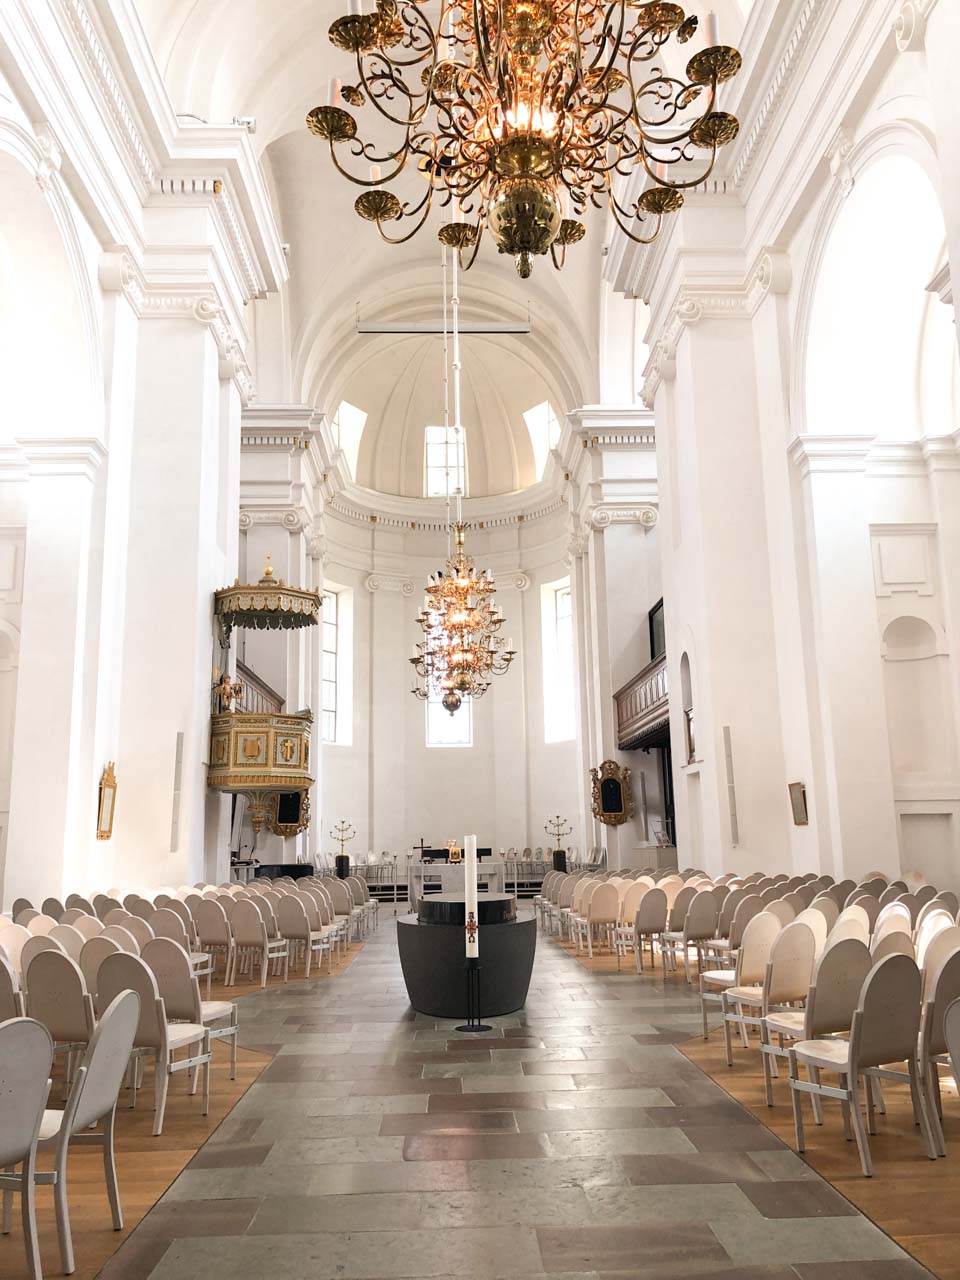 The inside of the Fredrik Church (Fredrikskyrkan) in Karlskrona, Sweden